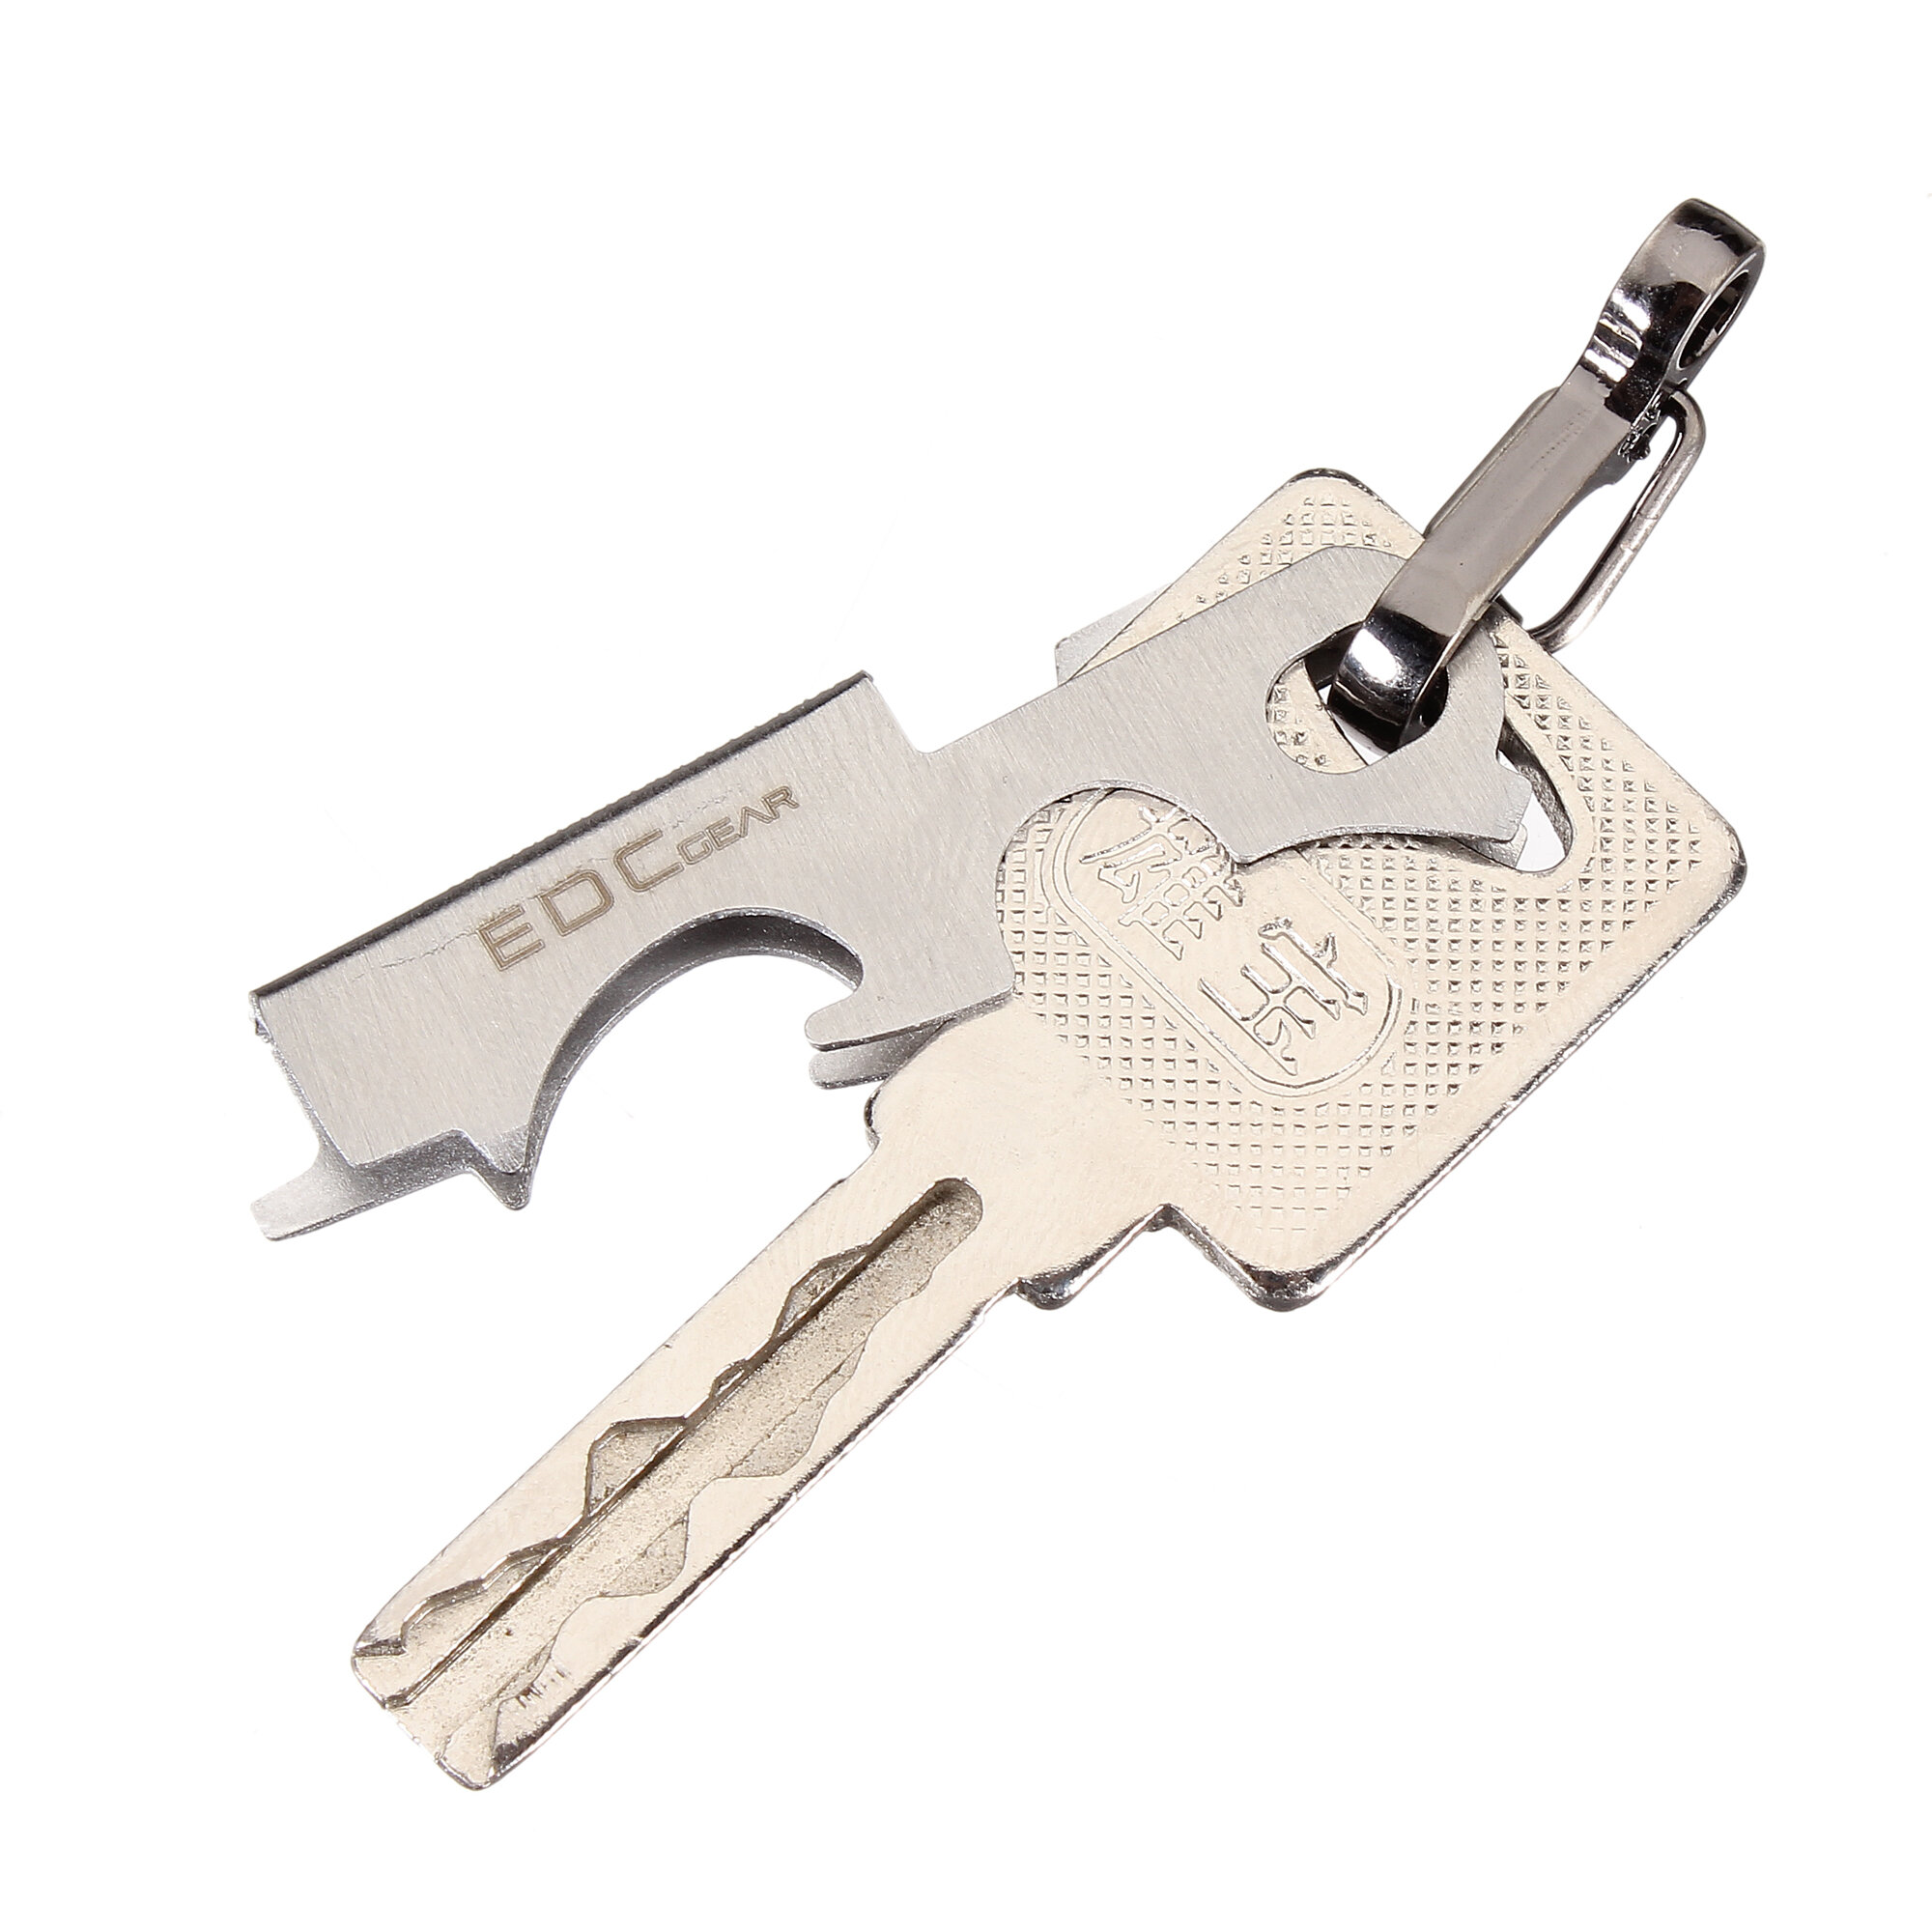 AOTDDOR EDC 8 in 1 Bottle Opener Keychain Gadget Multi-function Key Clip